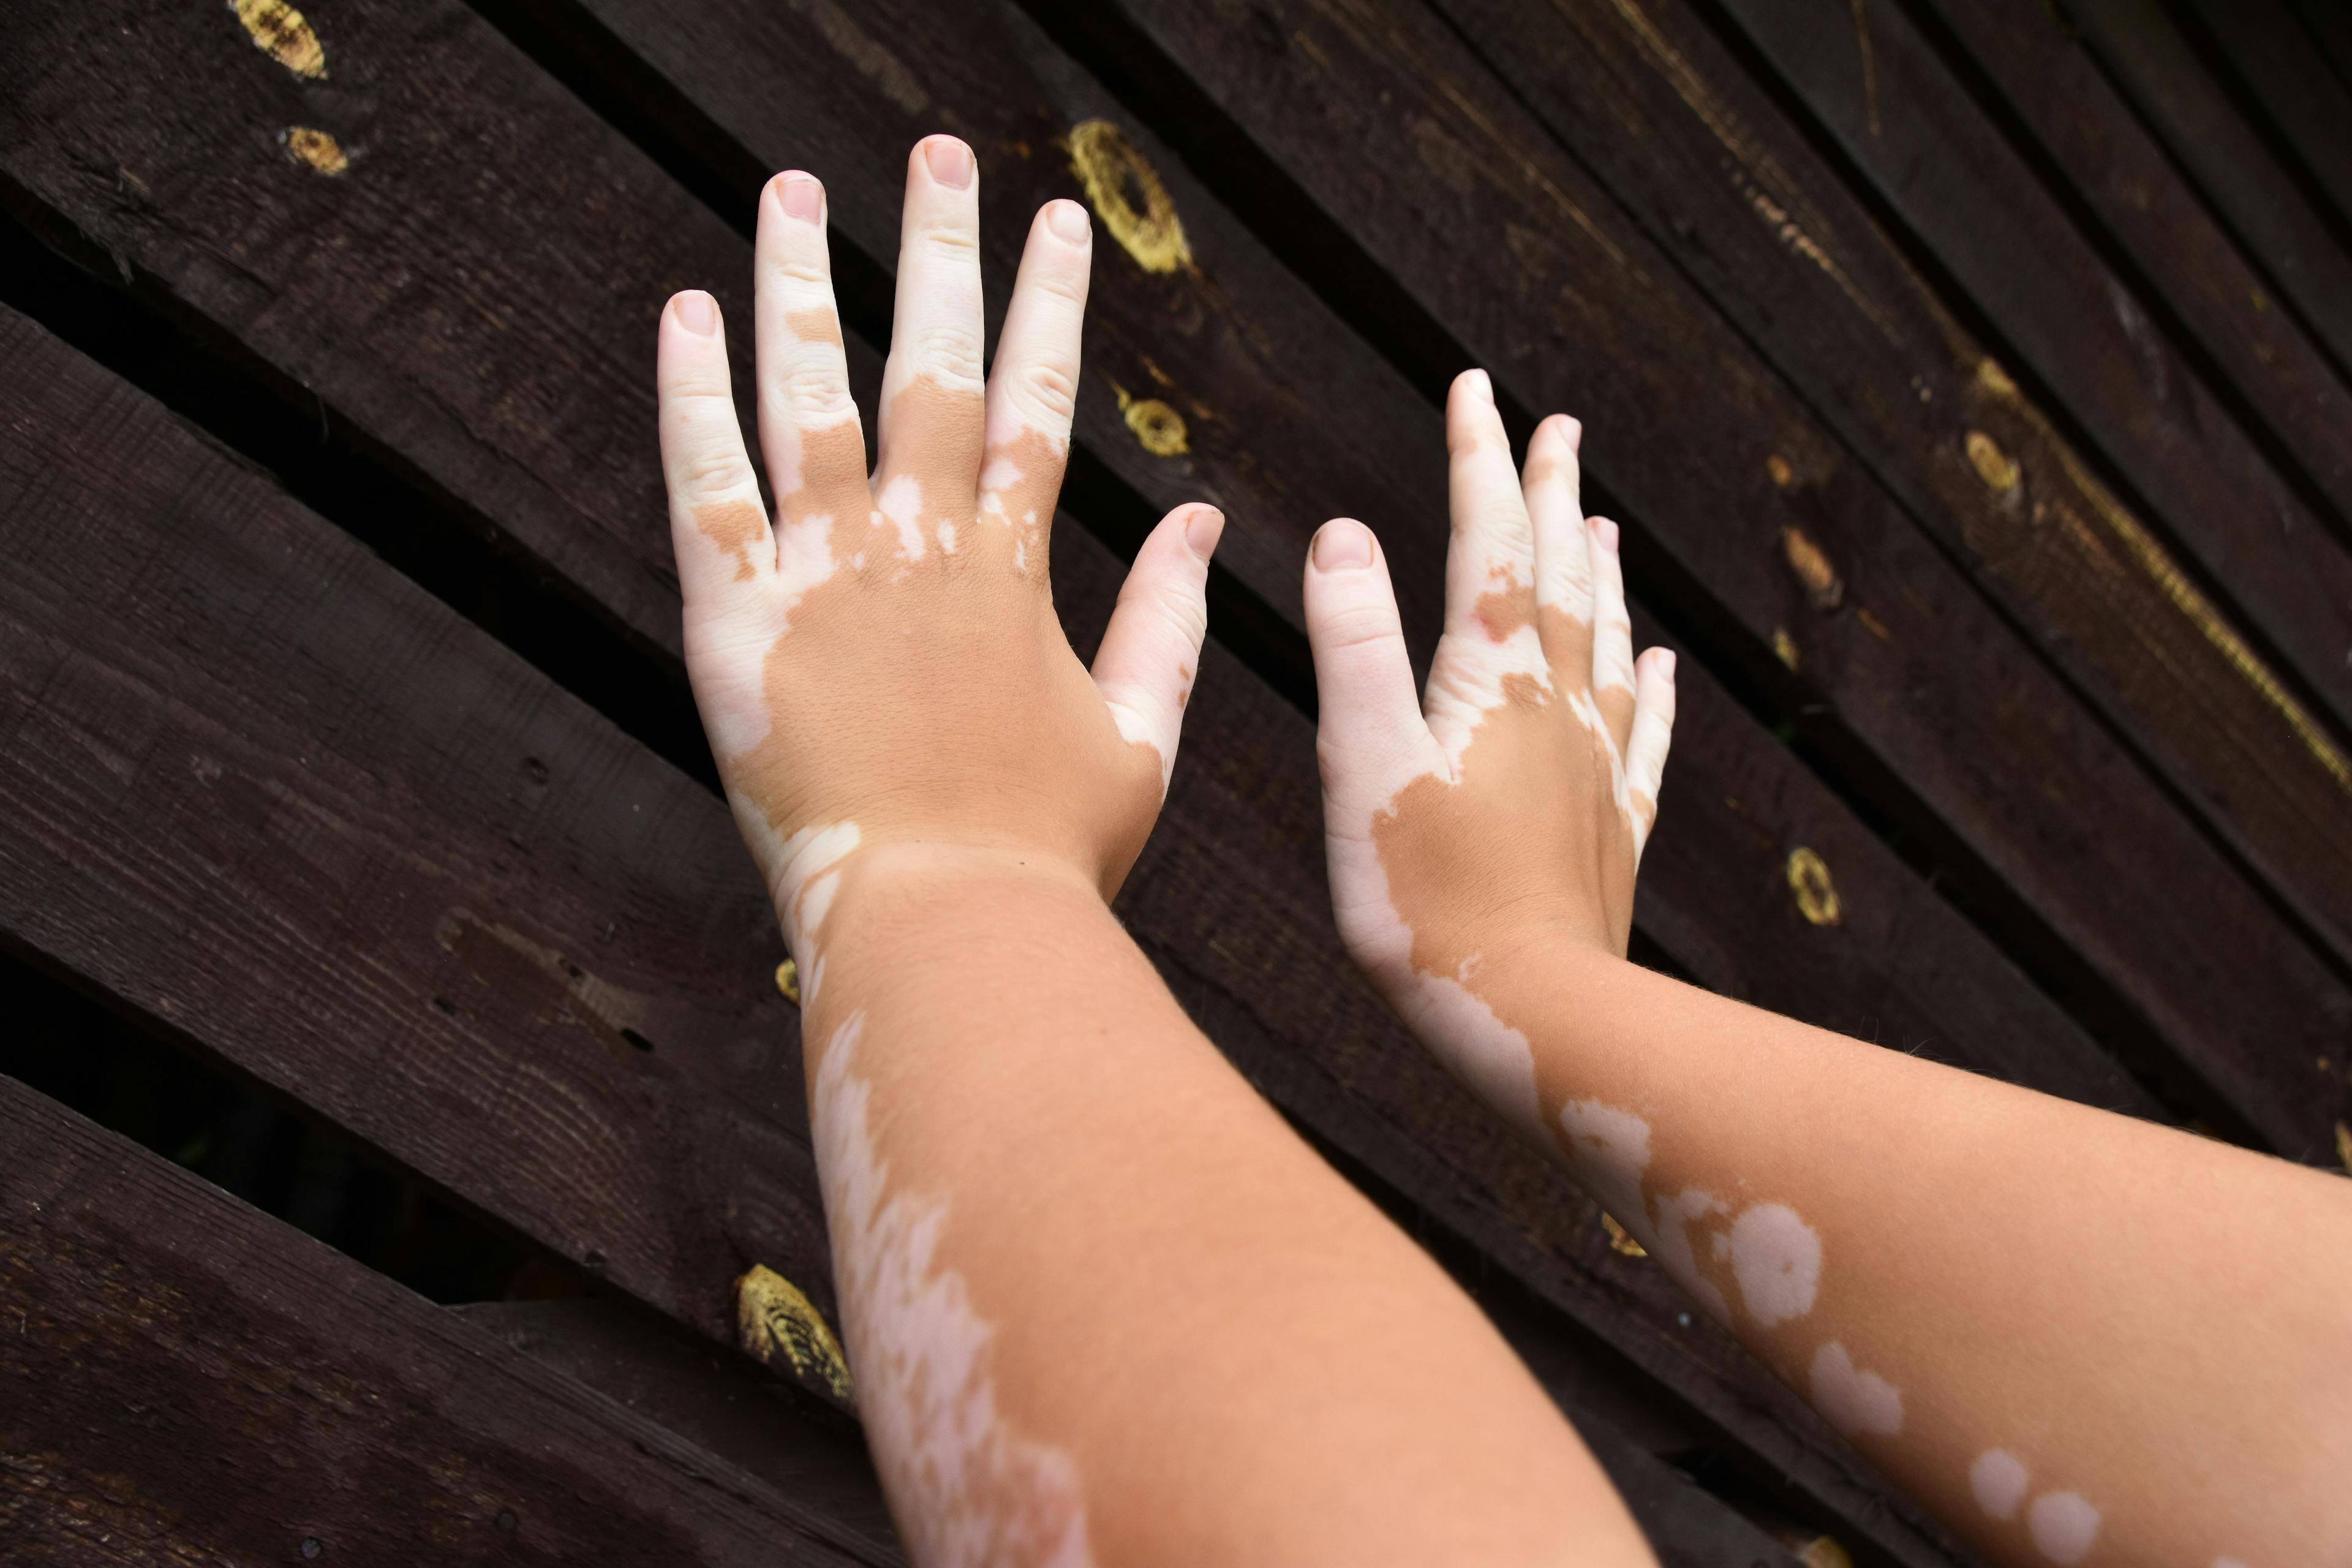 child's arms with vitiligo | Image Credit: Liga Cerina - stock.adobe.com